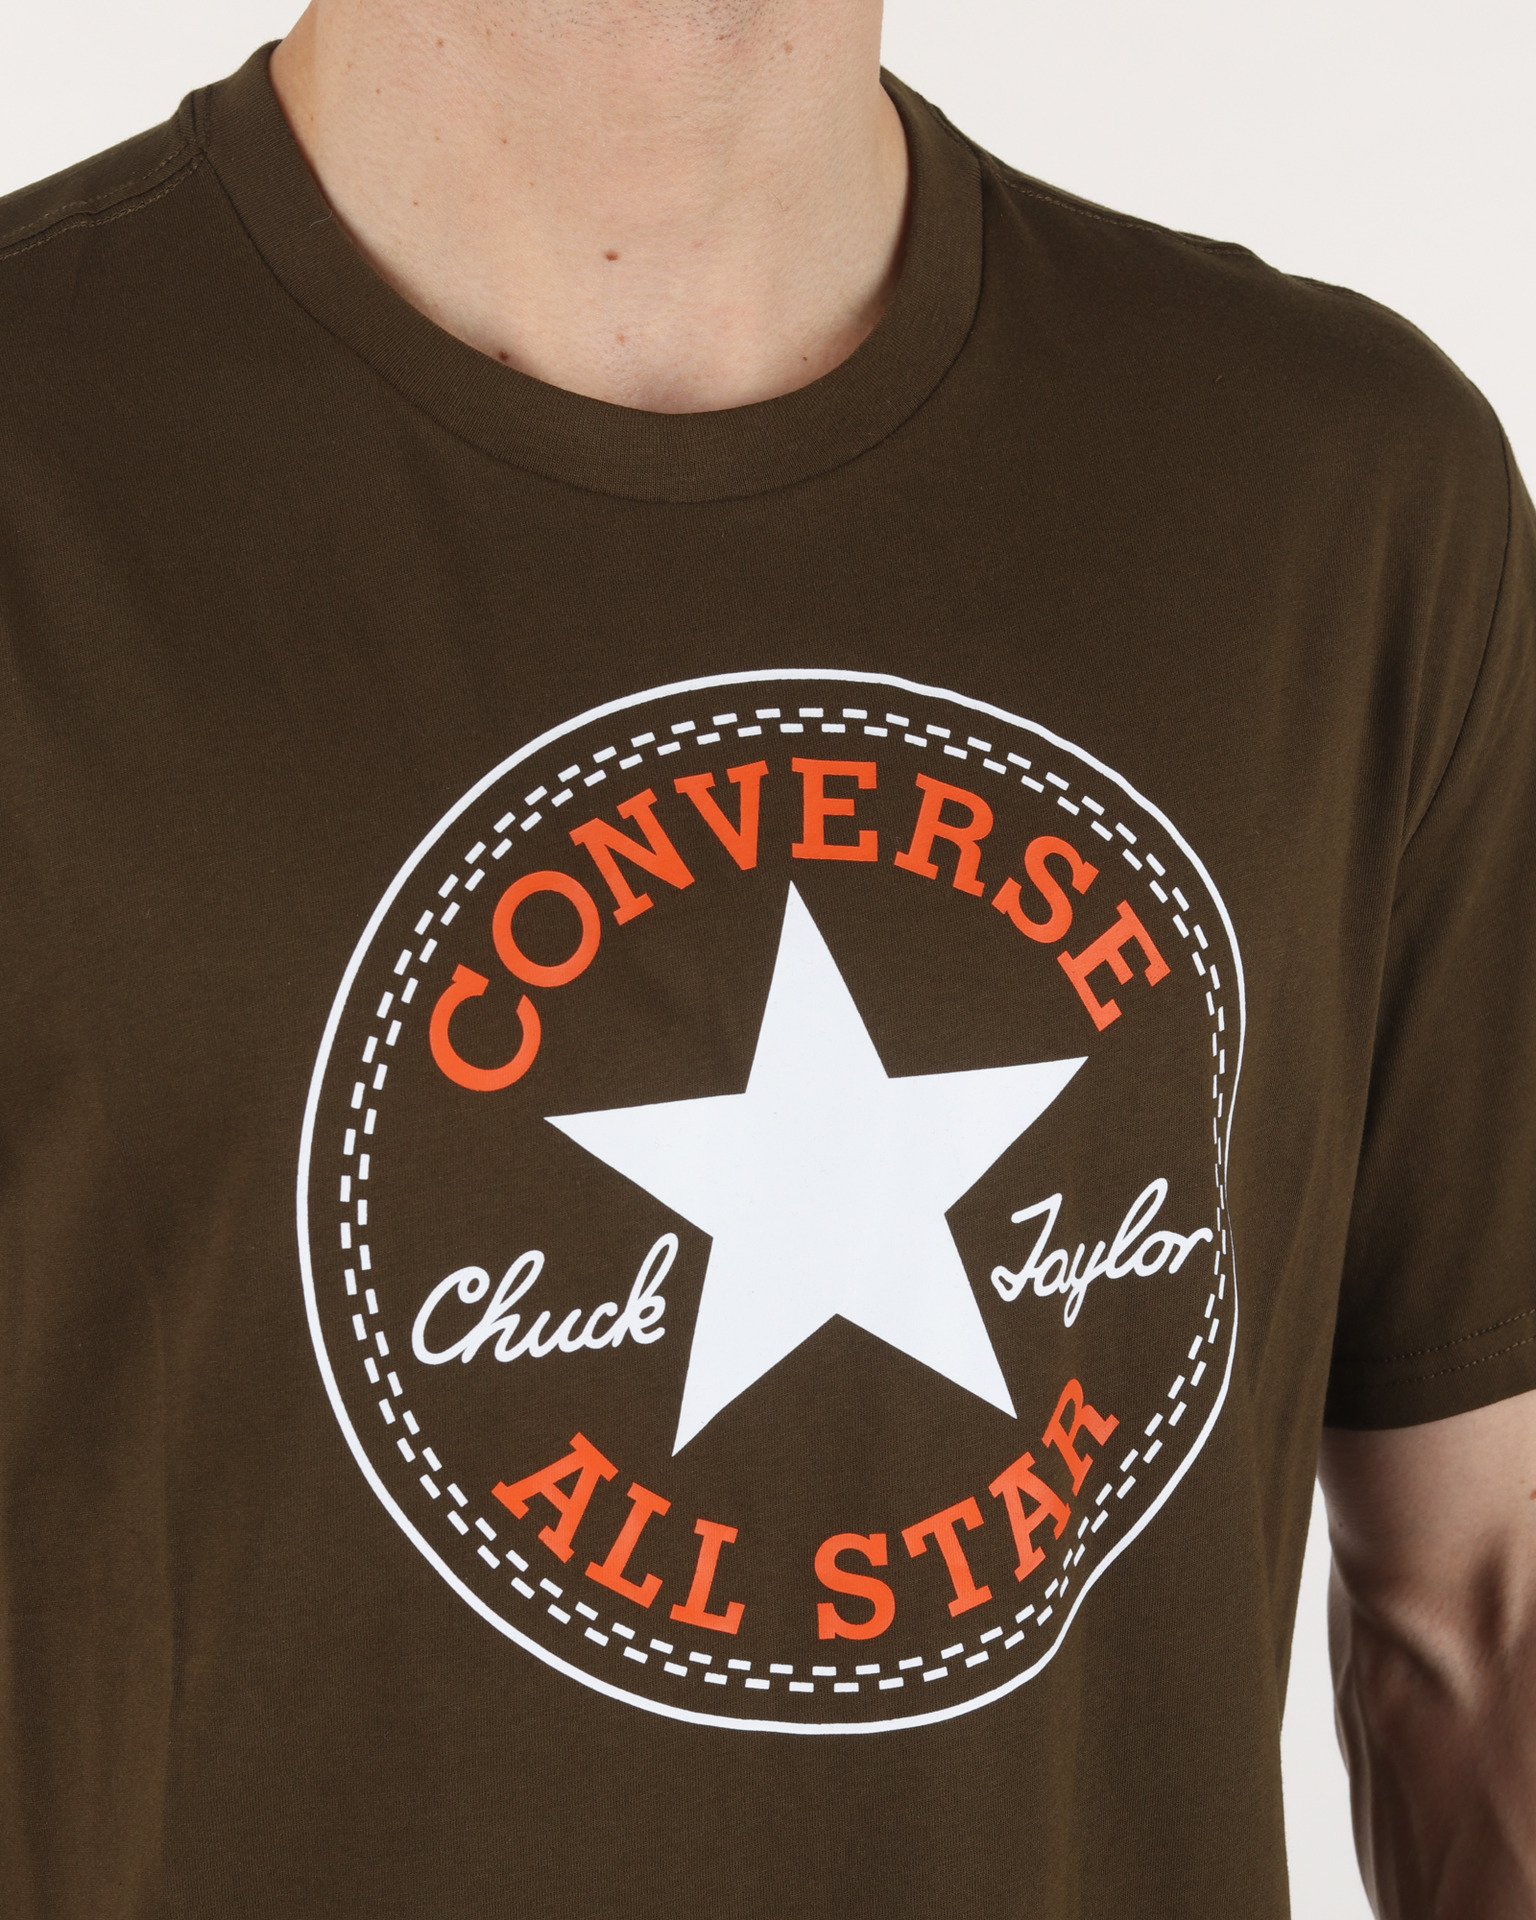 converse t shirt brown